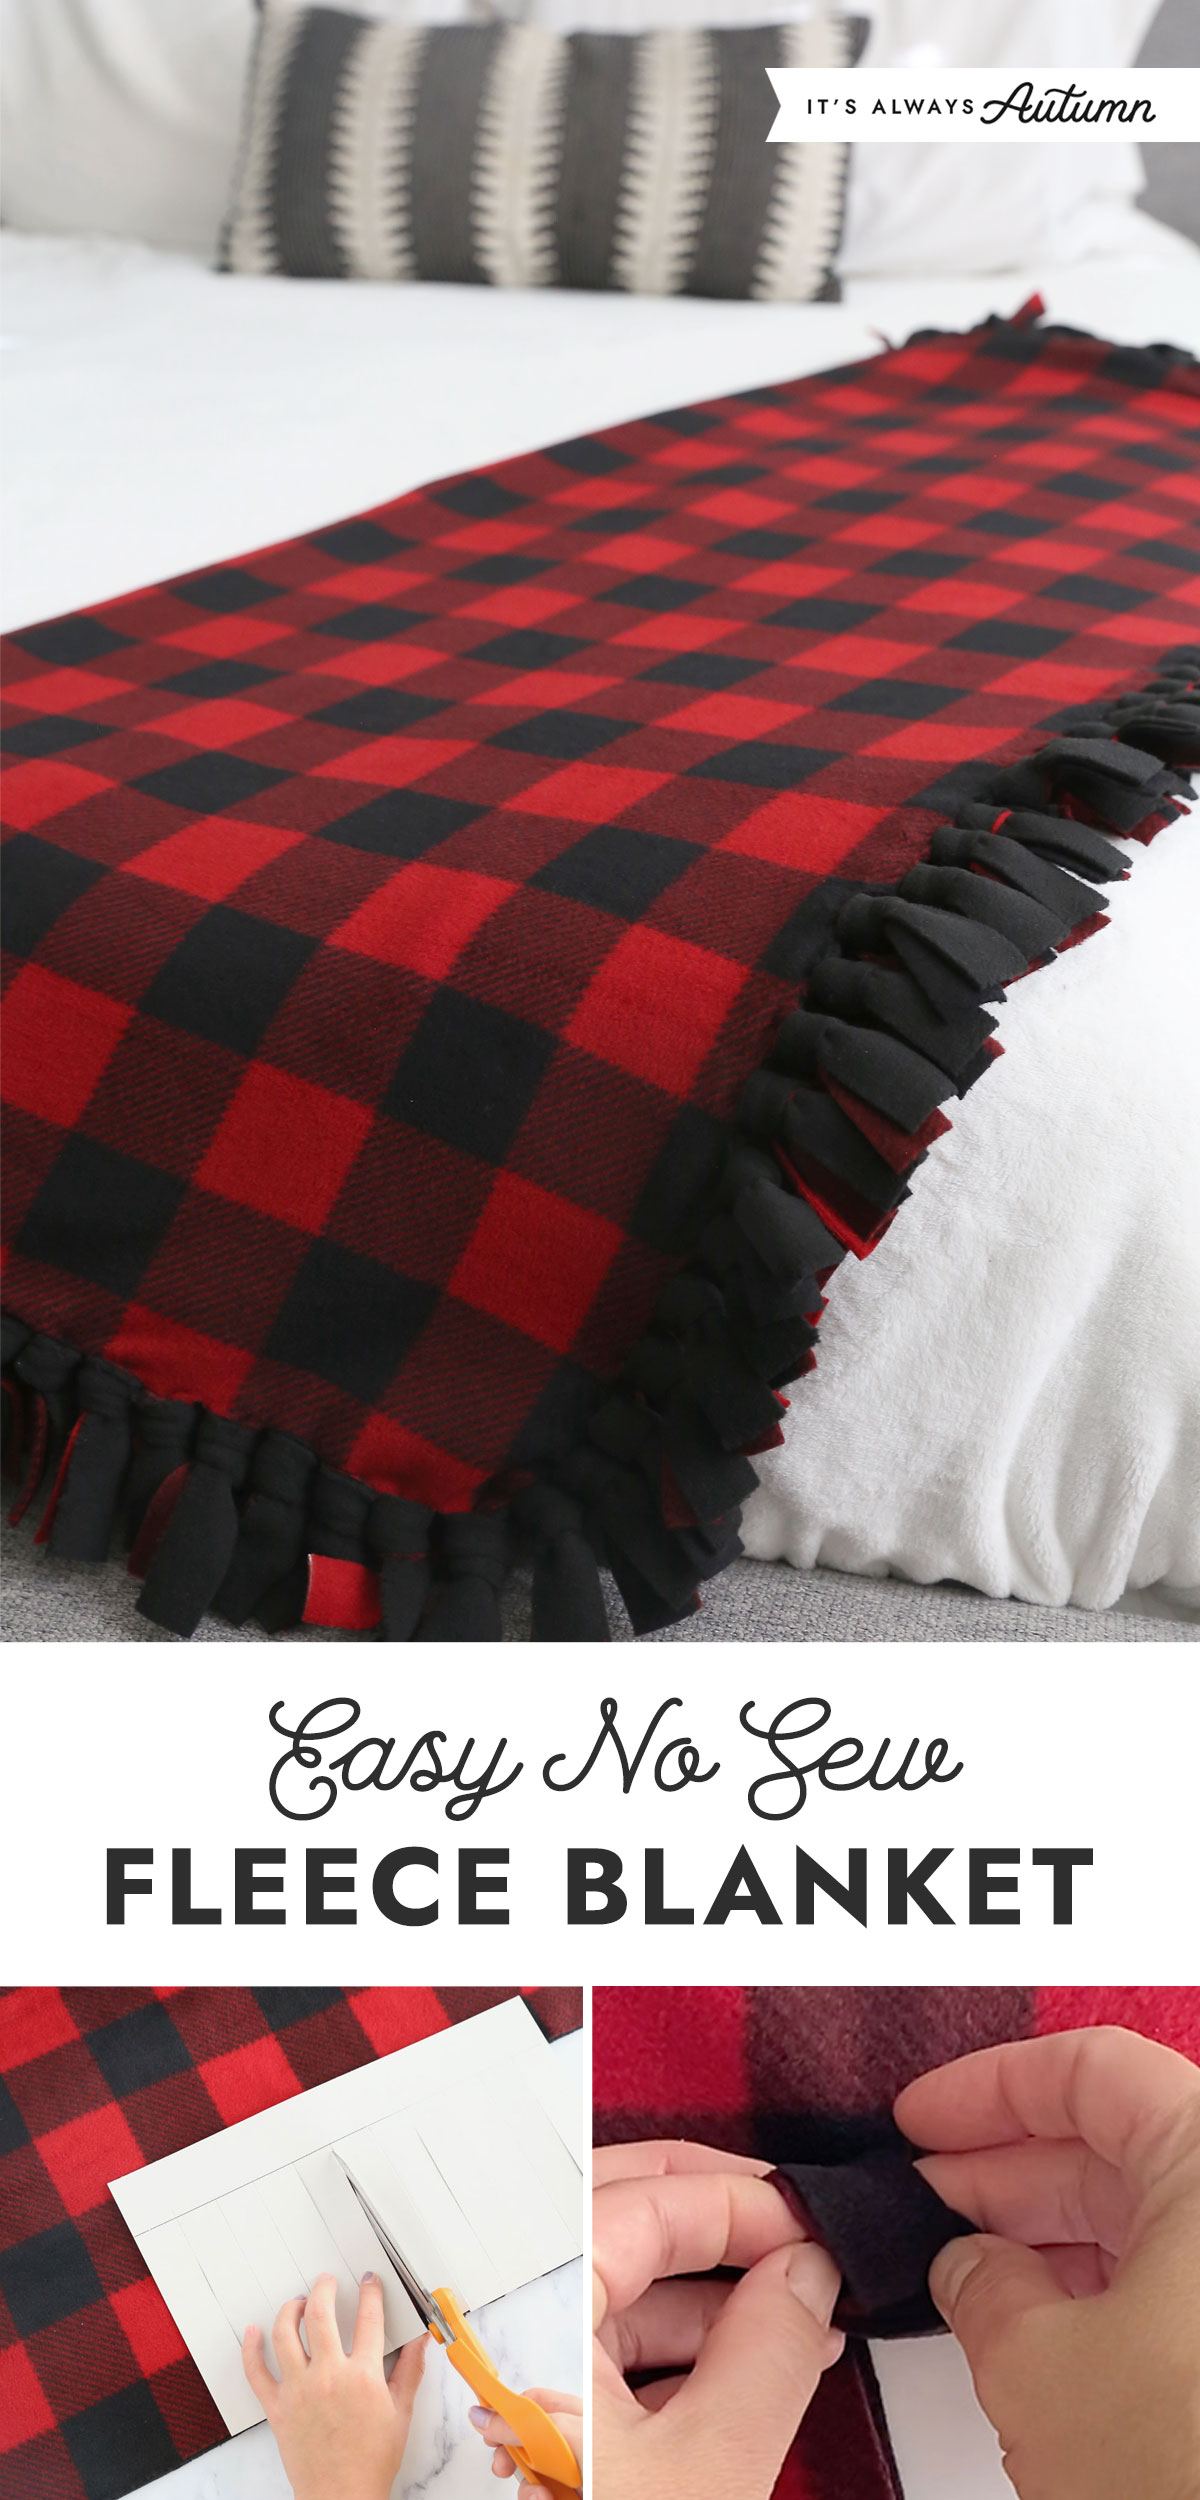 Kohl's Cares® No-Sew Fleece Throw Quilt Craft Kit